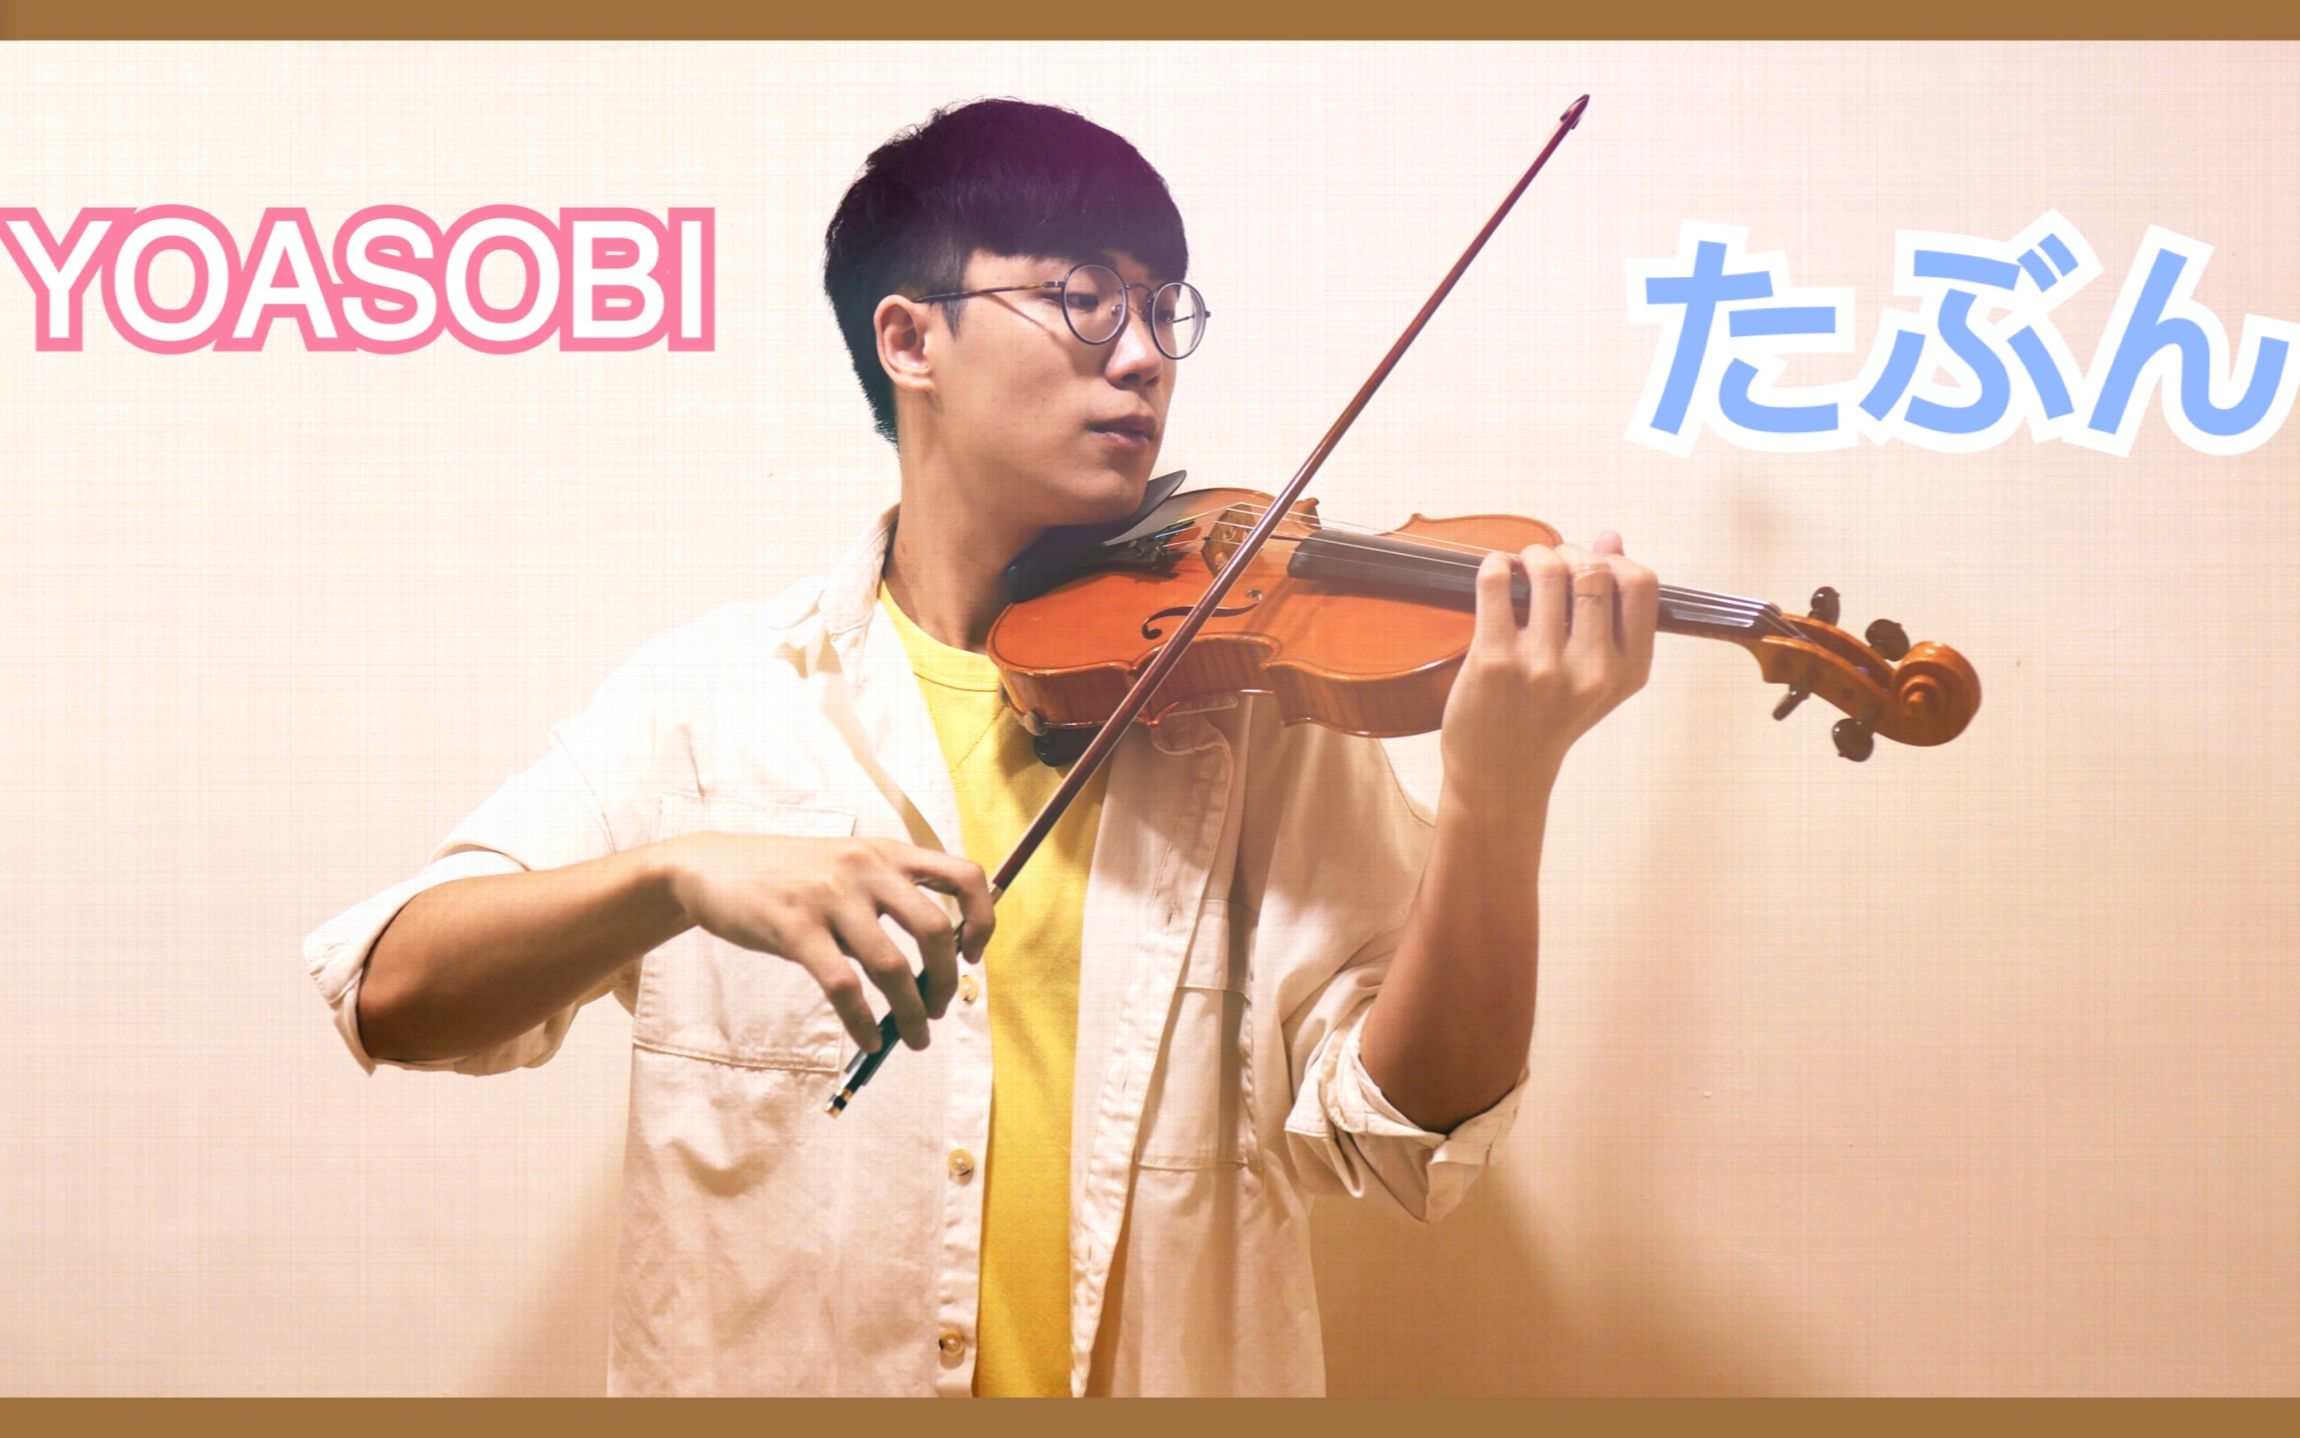 YOASOBI - 或许 / たぶん(tabun)⎟BoyViolin Violin Cover